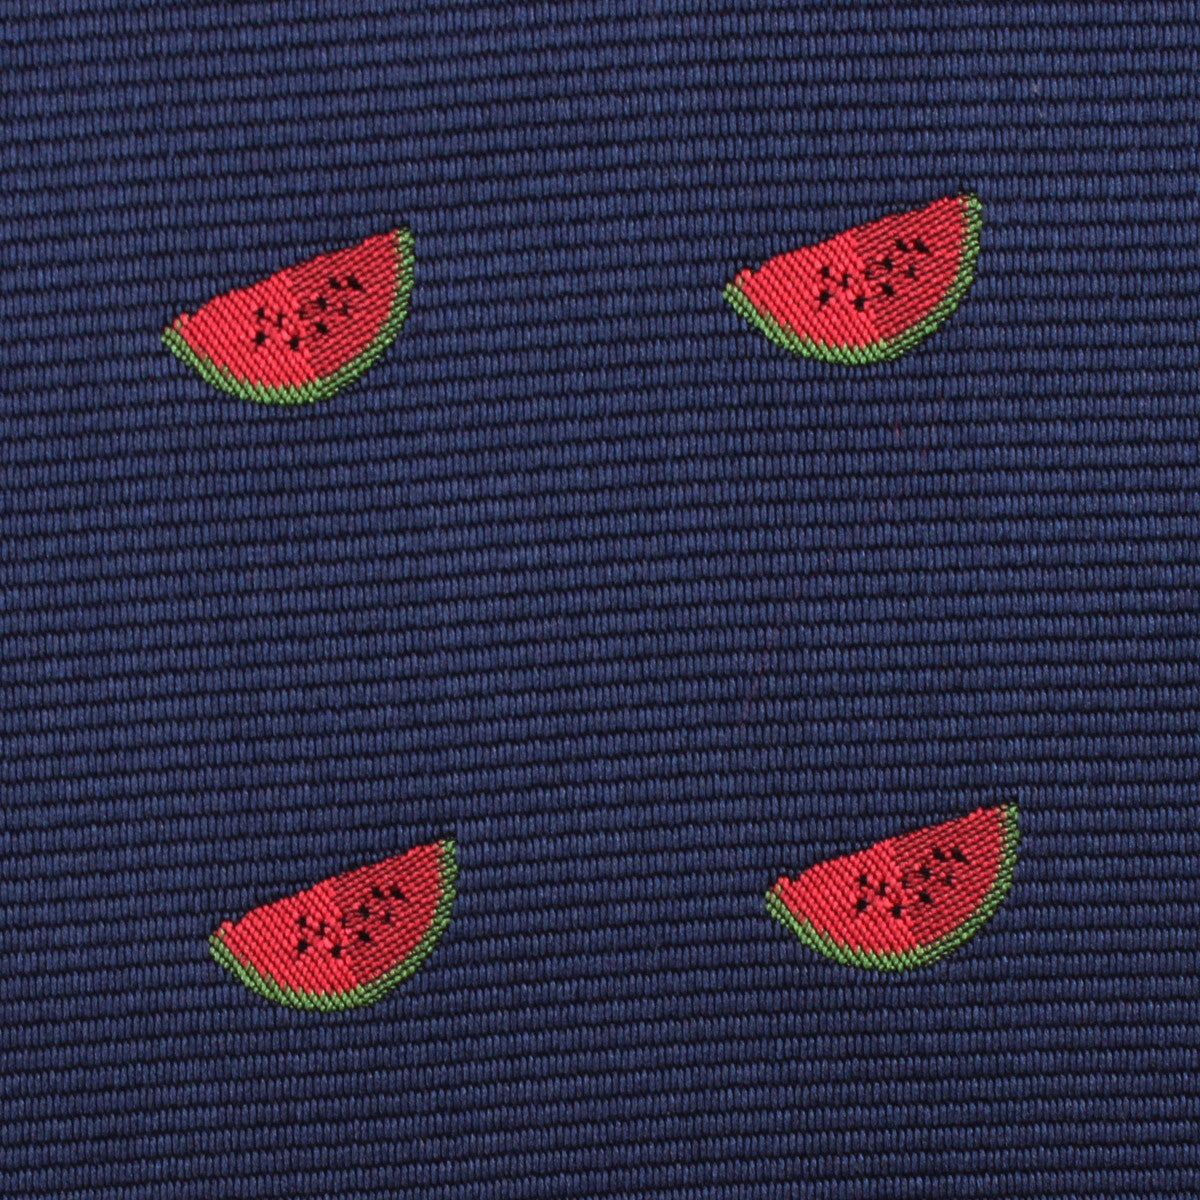 Watermelon Fabric Pocket Square